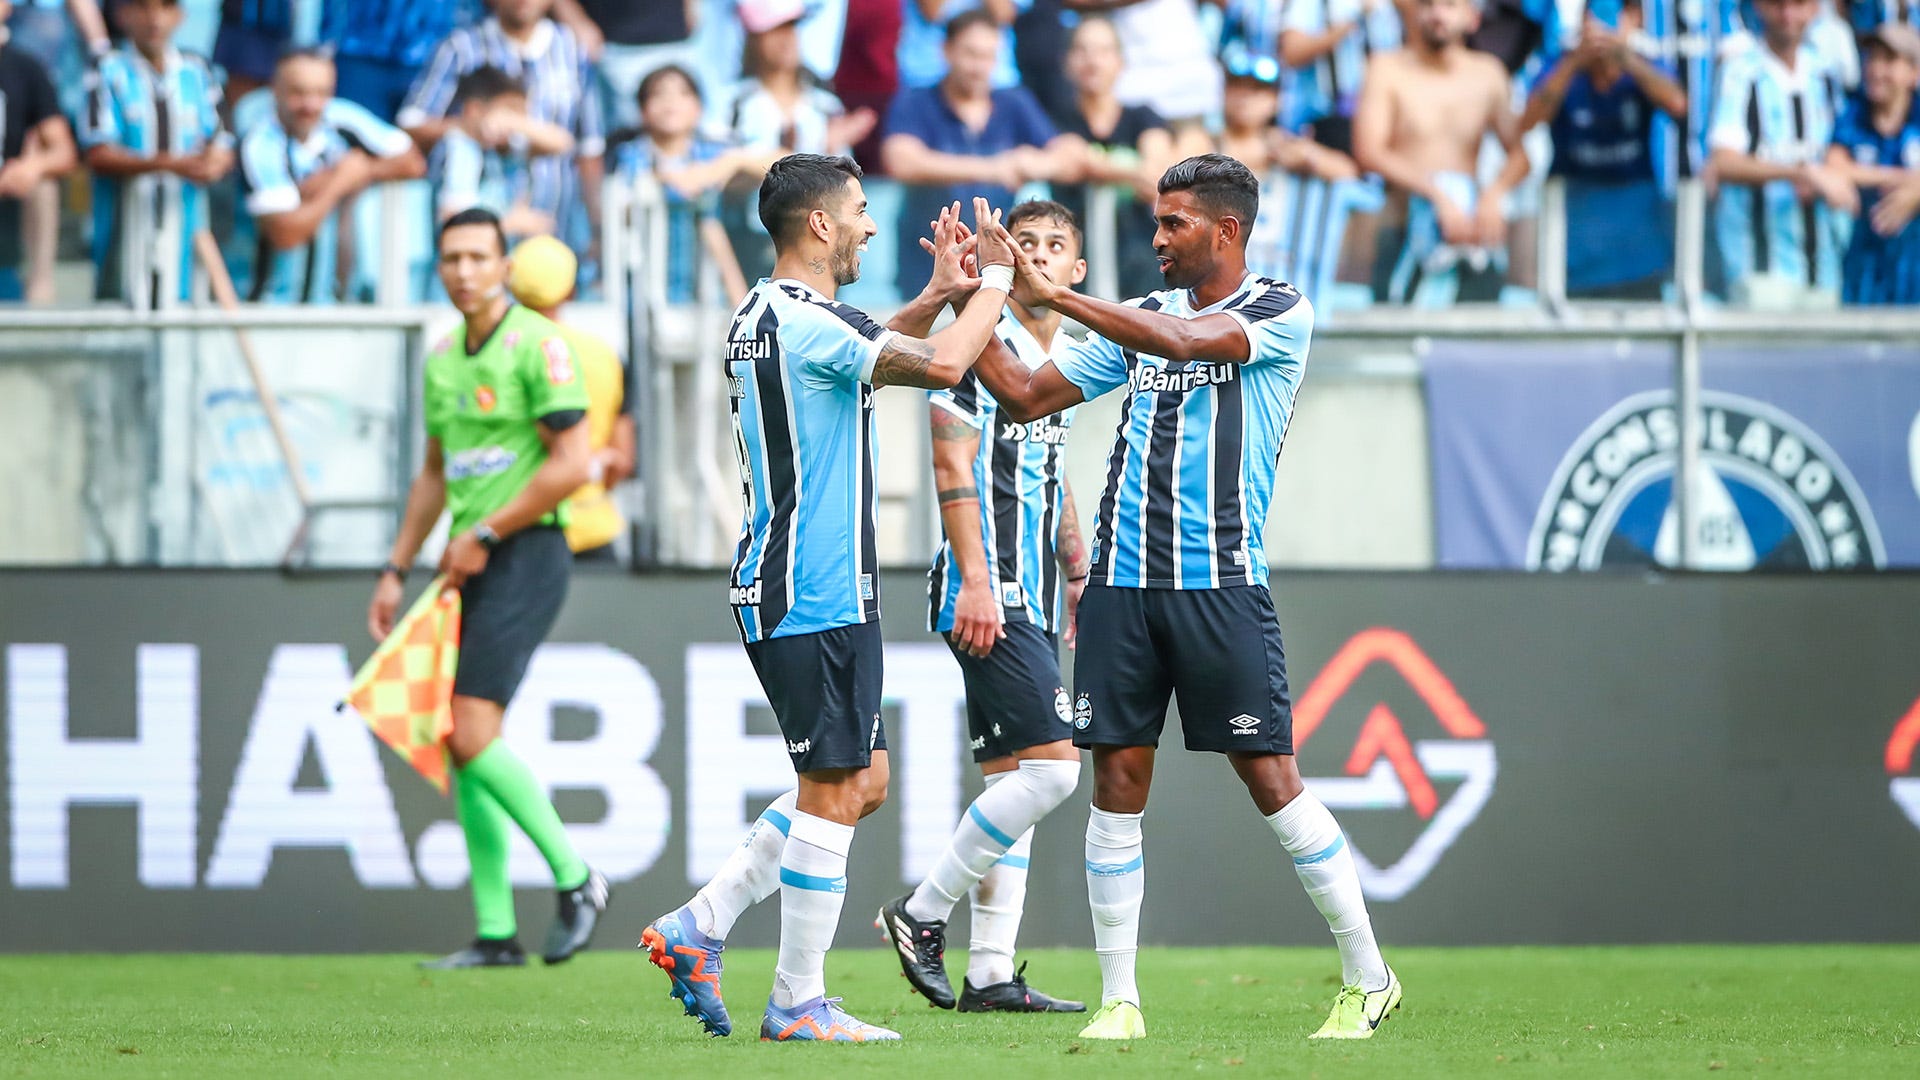 Gremio's Journey to Success: A Brazilian Football Tale